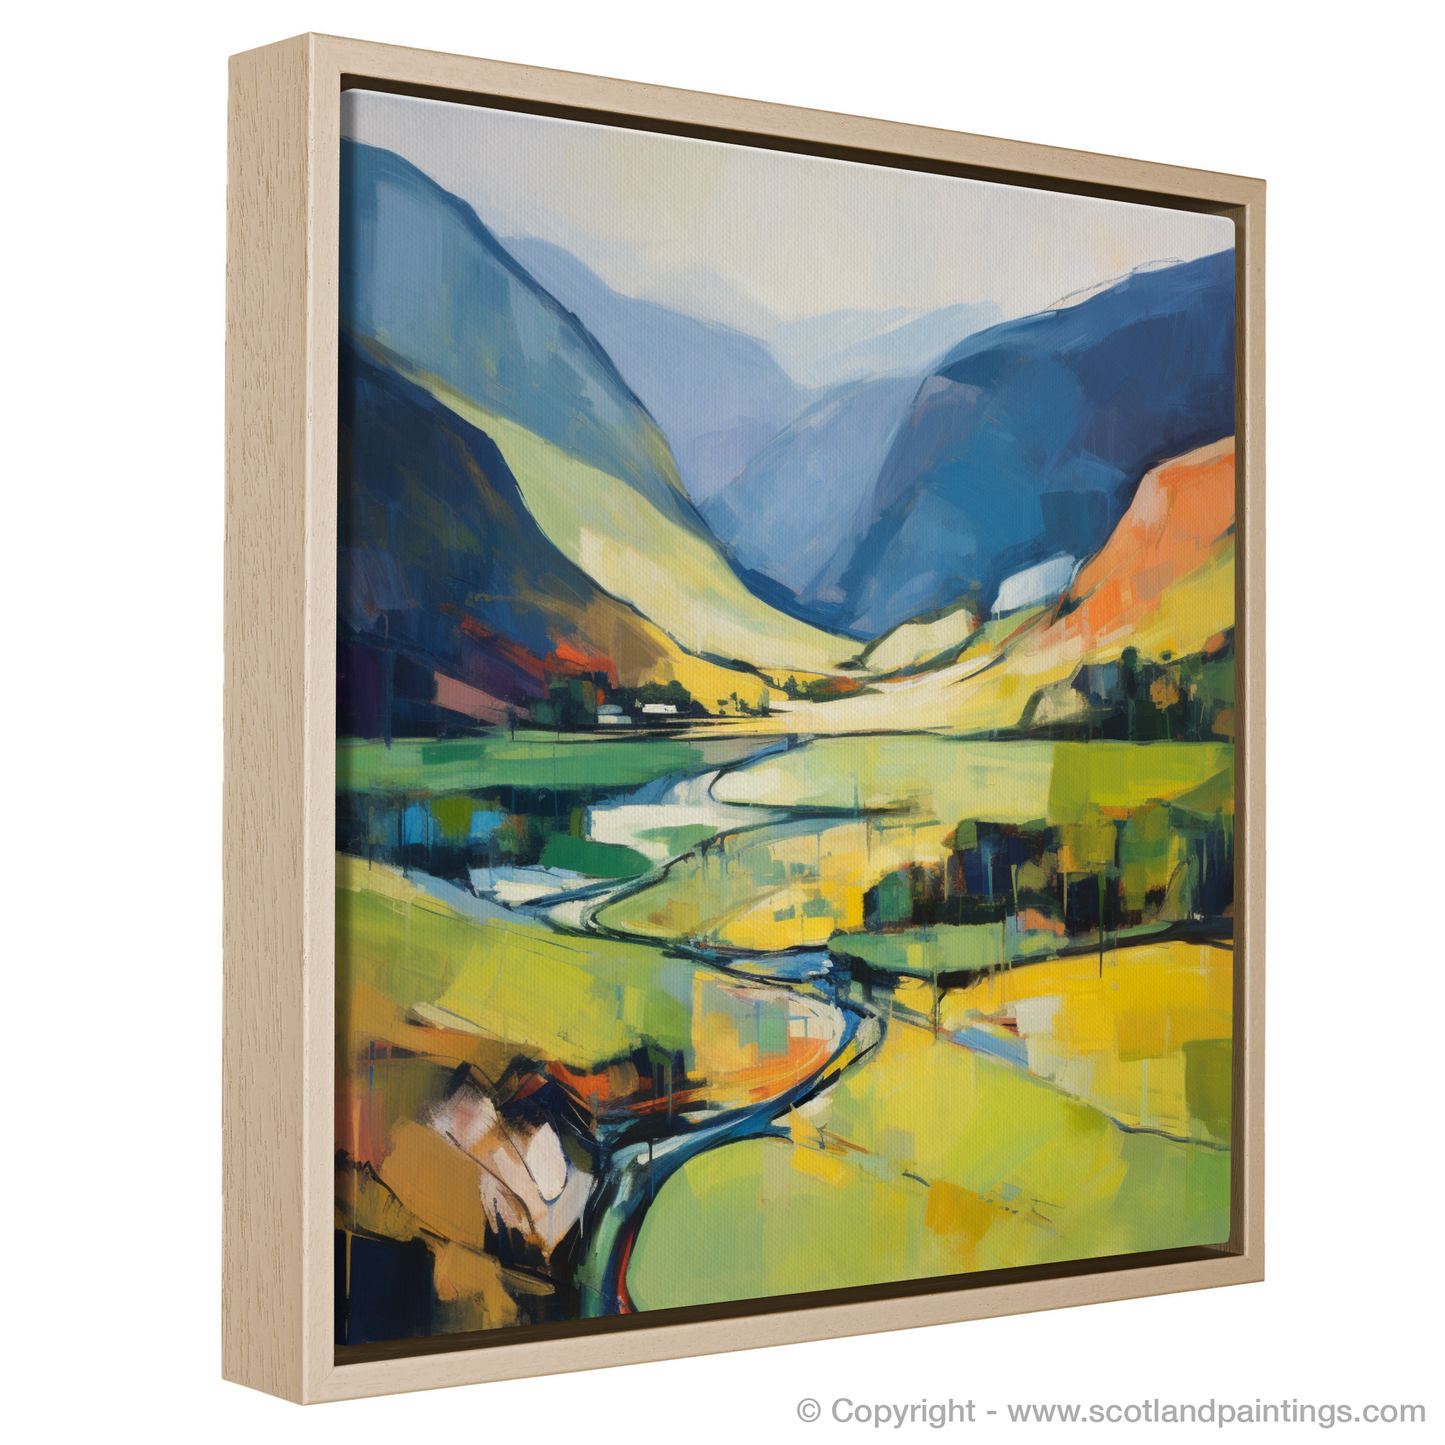 Summer Essence of Glen Nevis: An Abstract Impressionist Journey